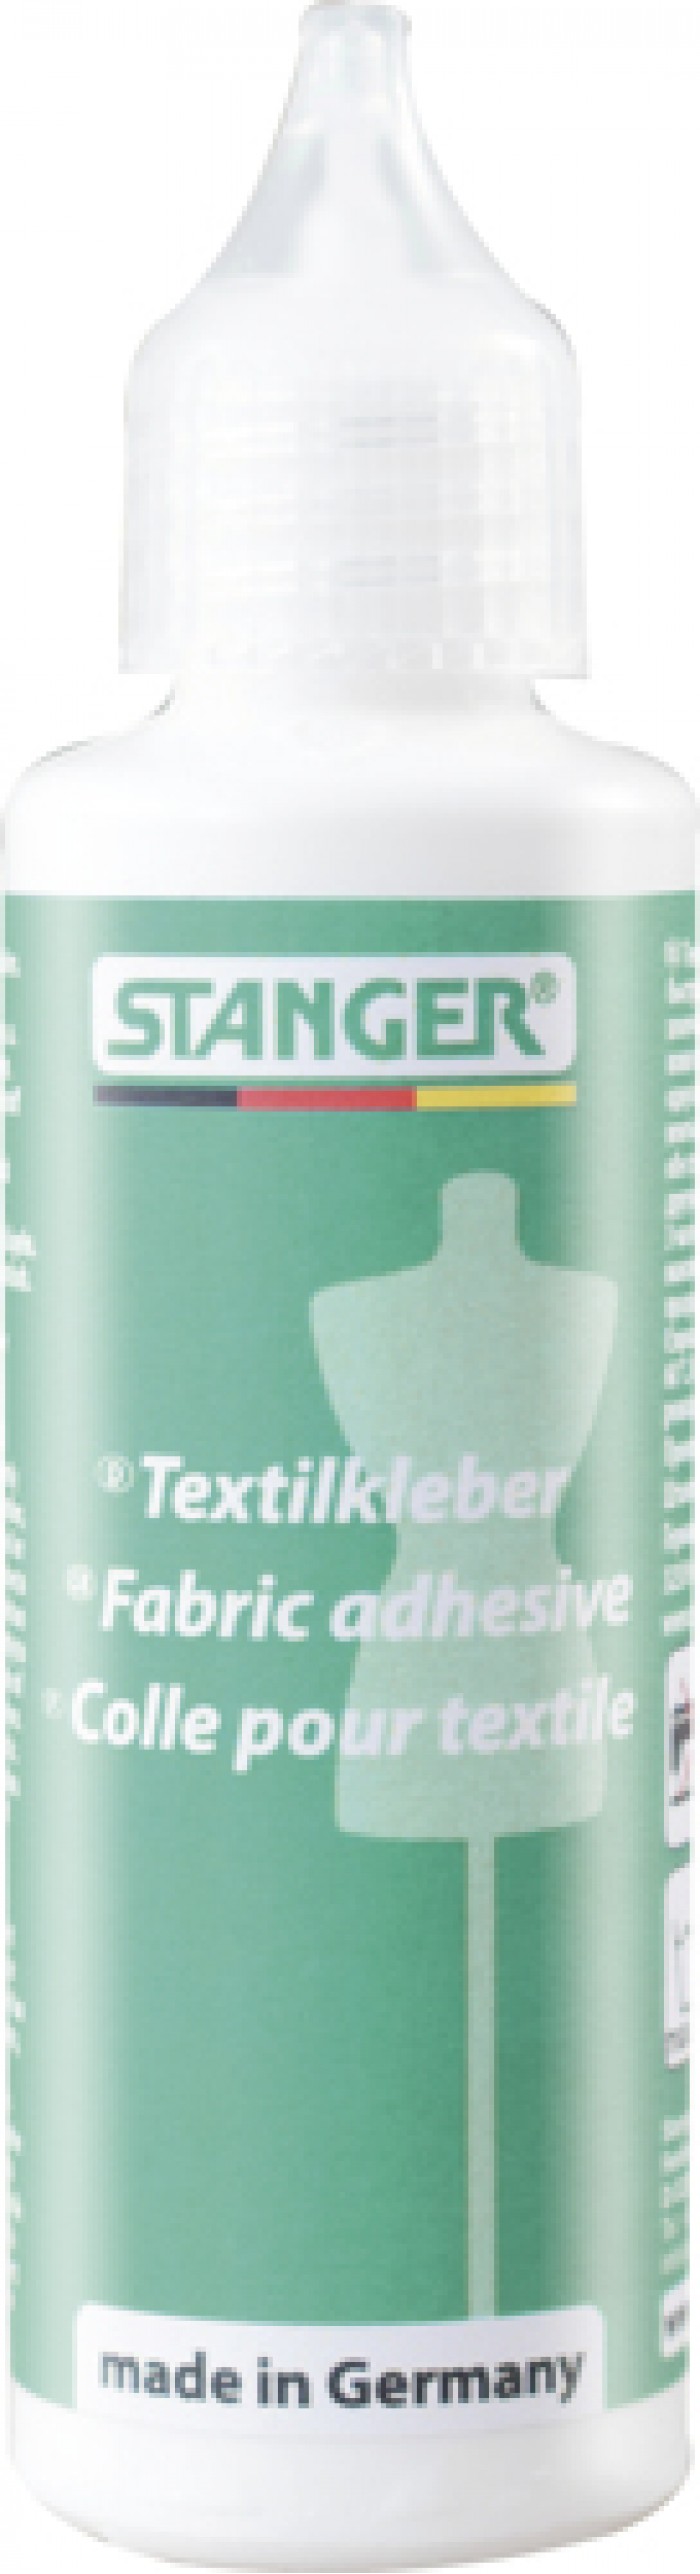 Textile Glue / Textilkleber 50 g, bottle, solvent free / LM-frei